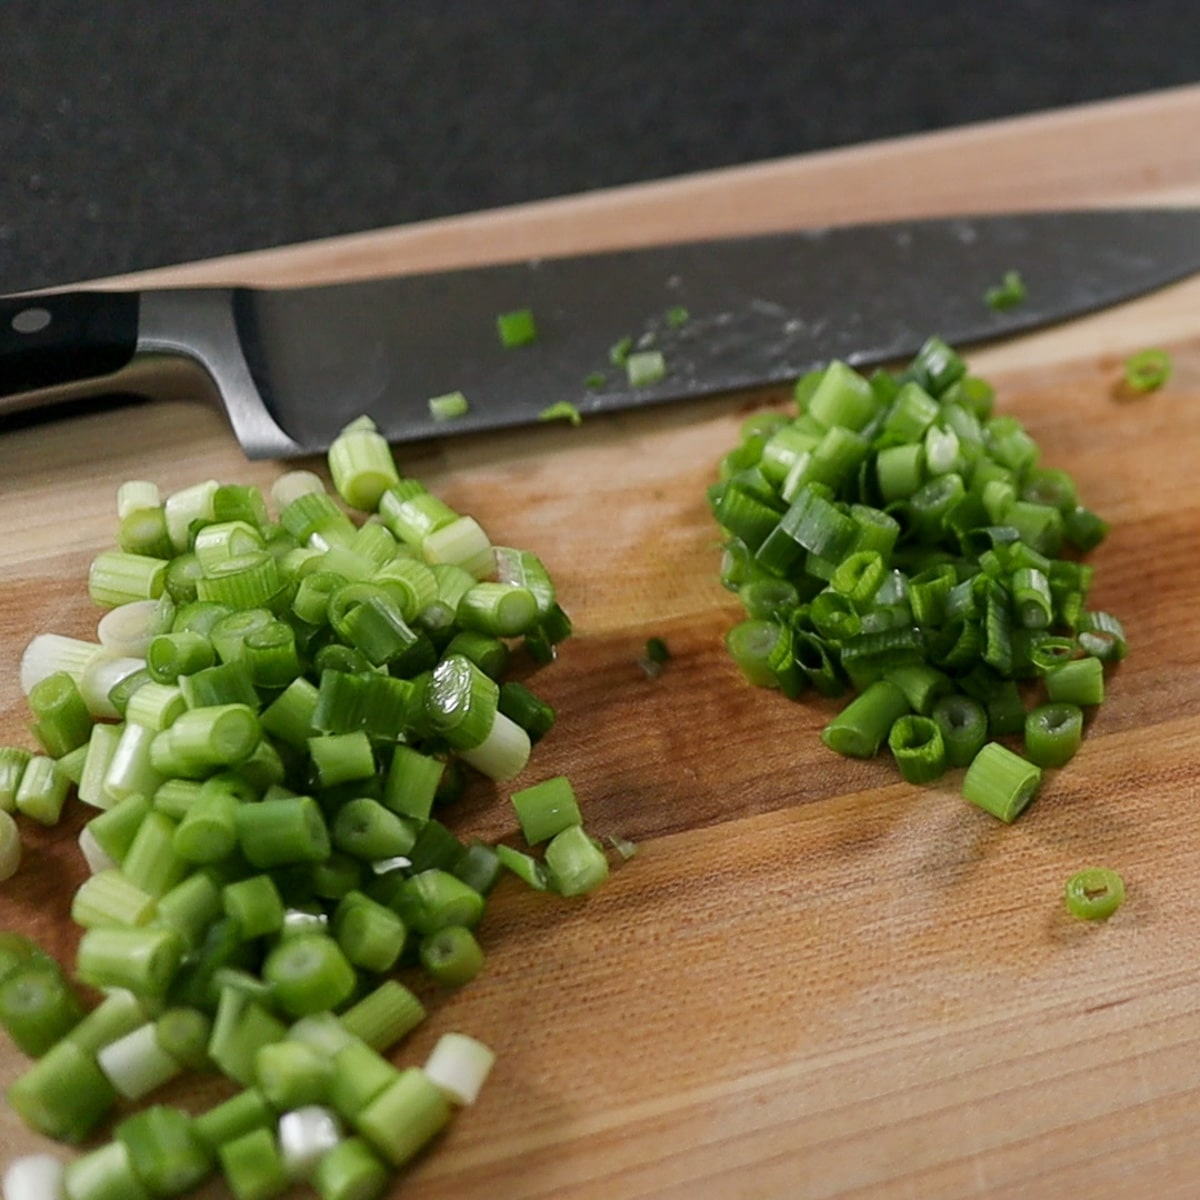 Cut up green onions on a cutting board.